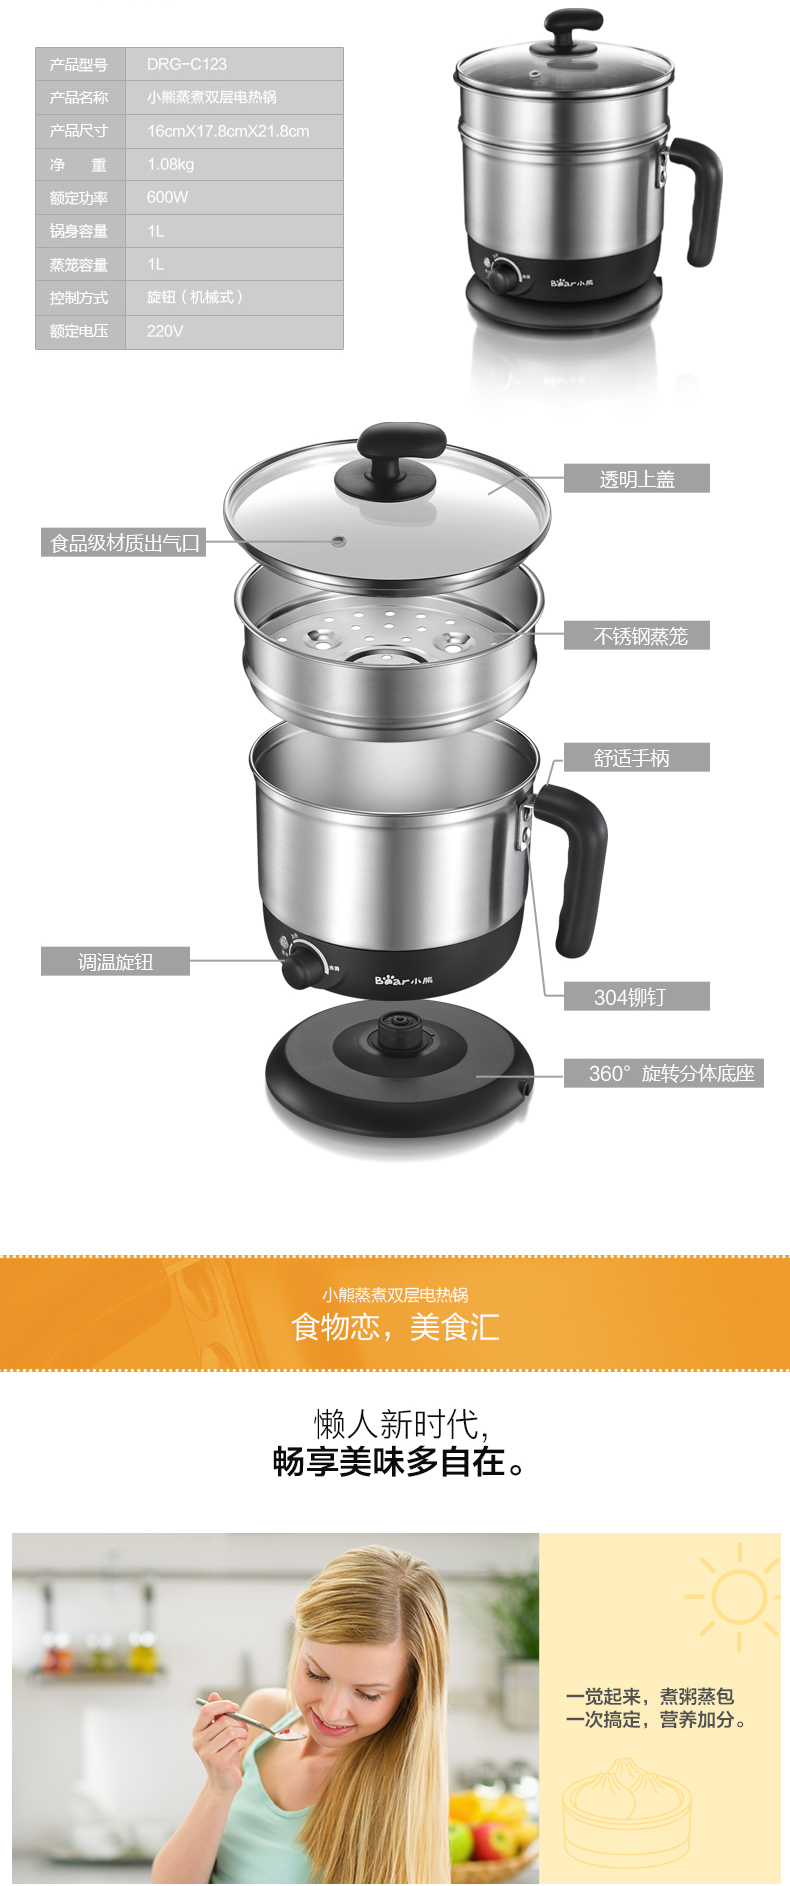 Bear/小熊 DRG-C123 电热锅多功能分体蒸煮双层电热杯 煮面锅